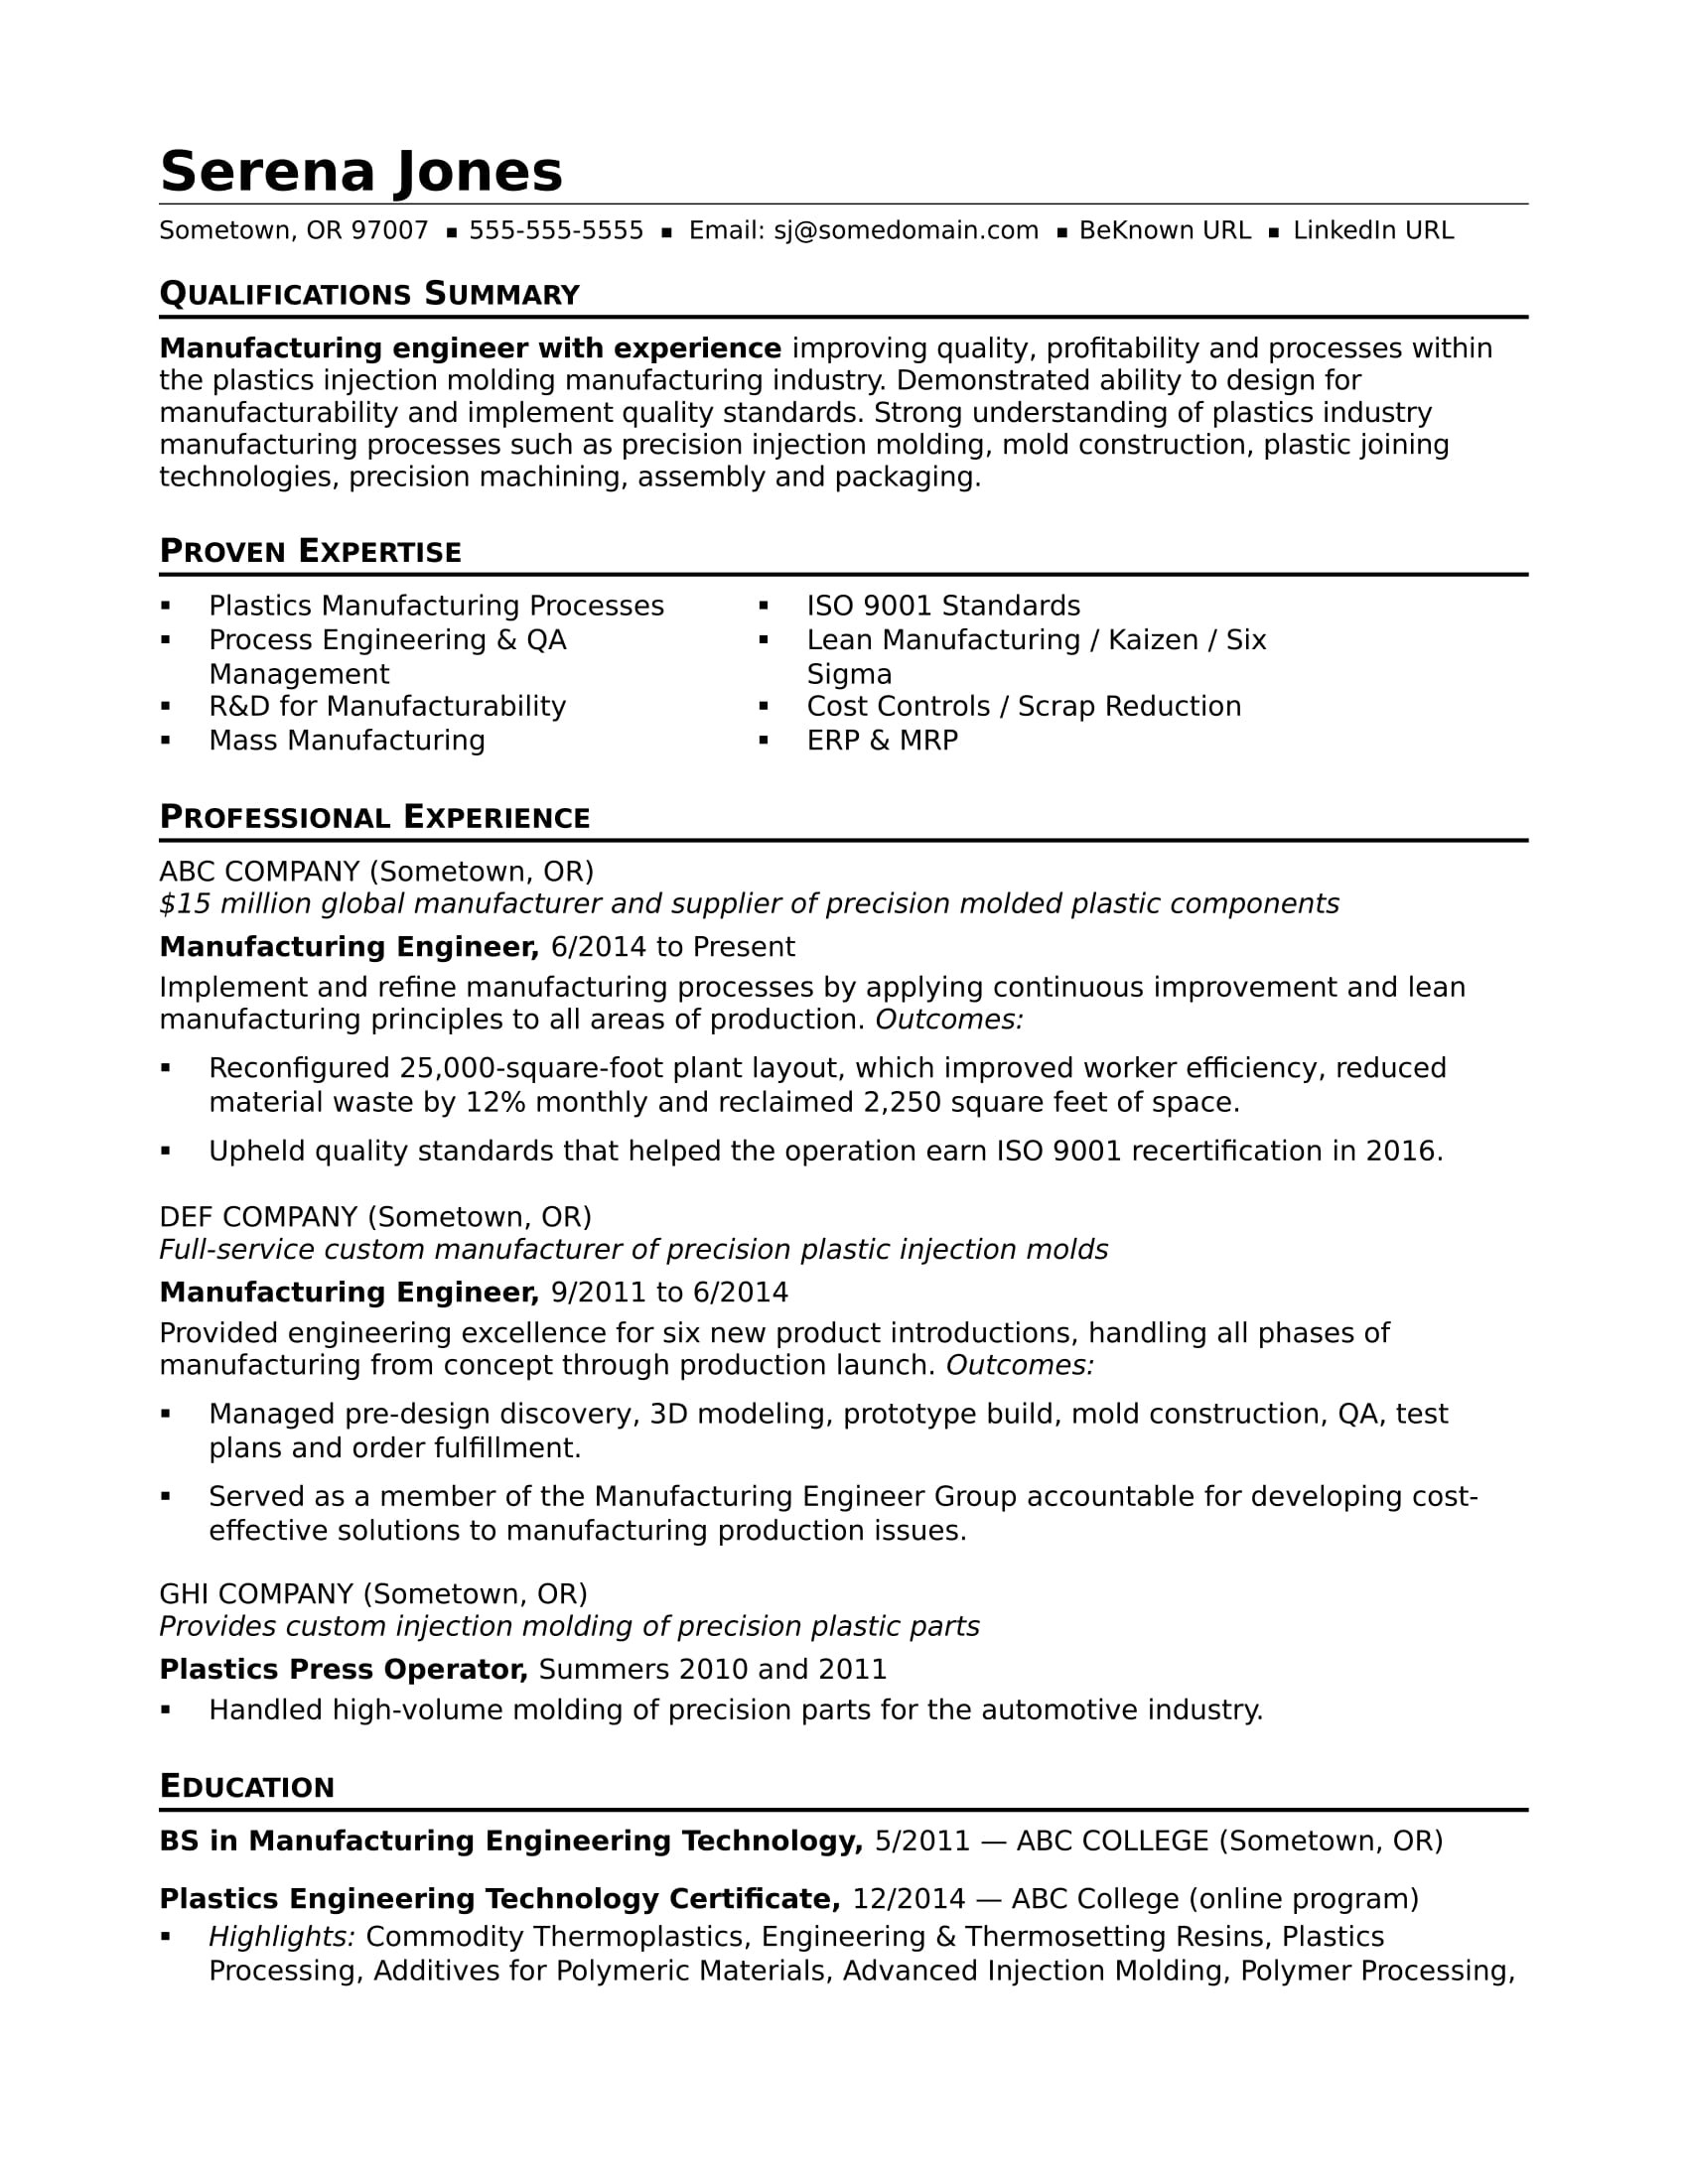 Sample Resume Objectives for Entry Level Manufacturing Manufacturing Engineer Resume Sample Monster.com